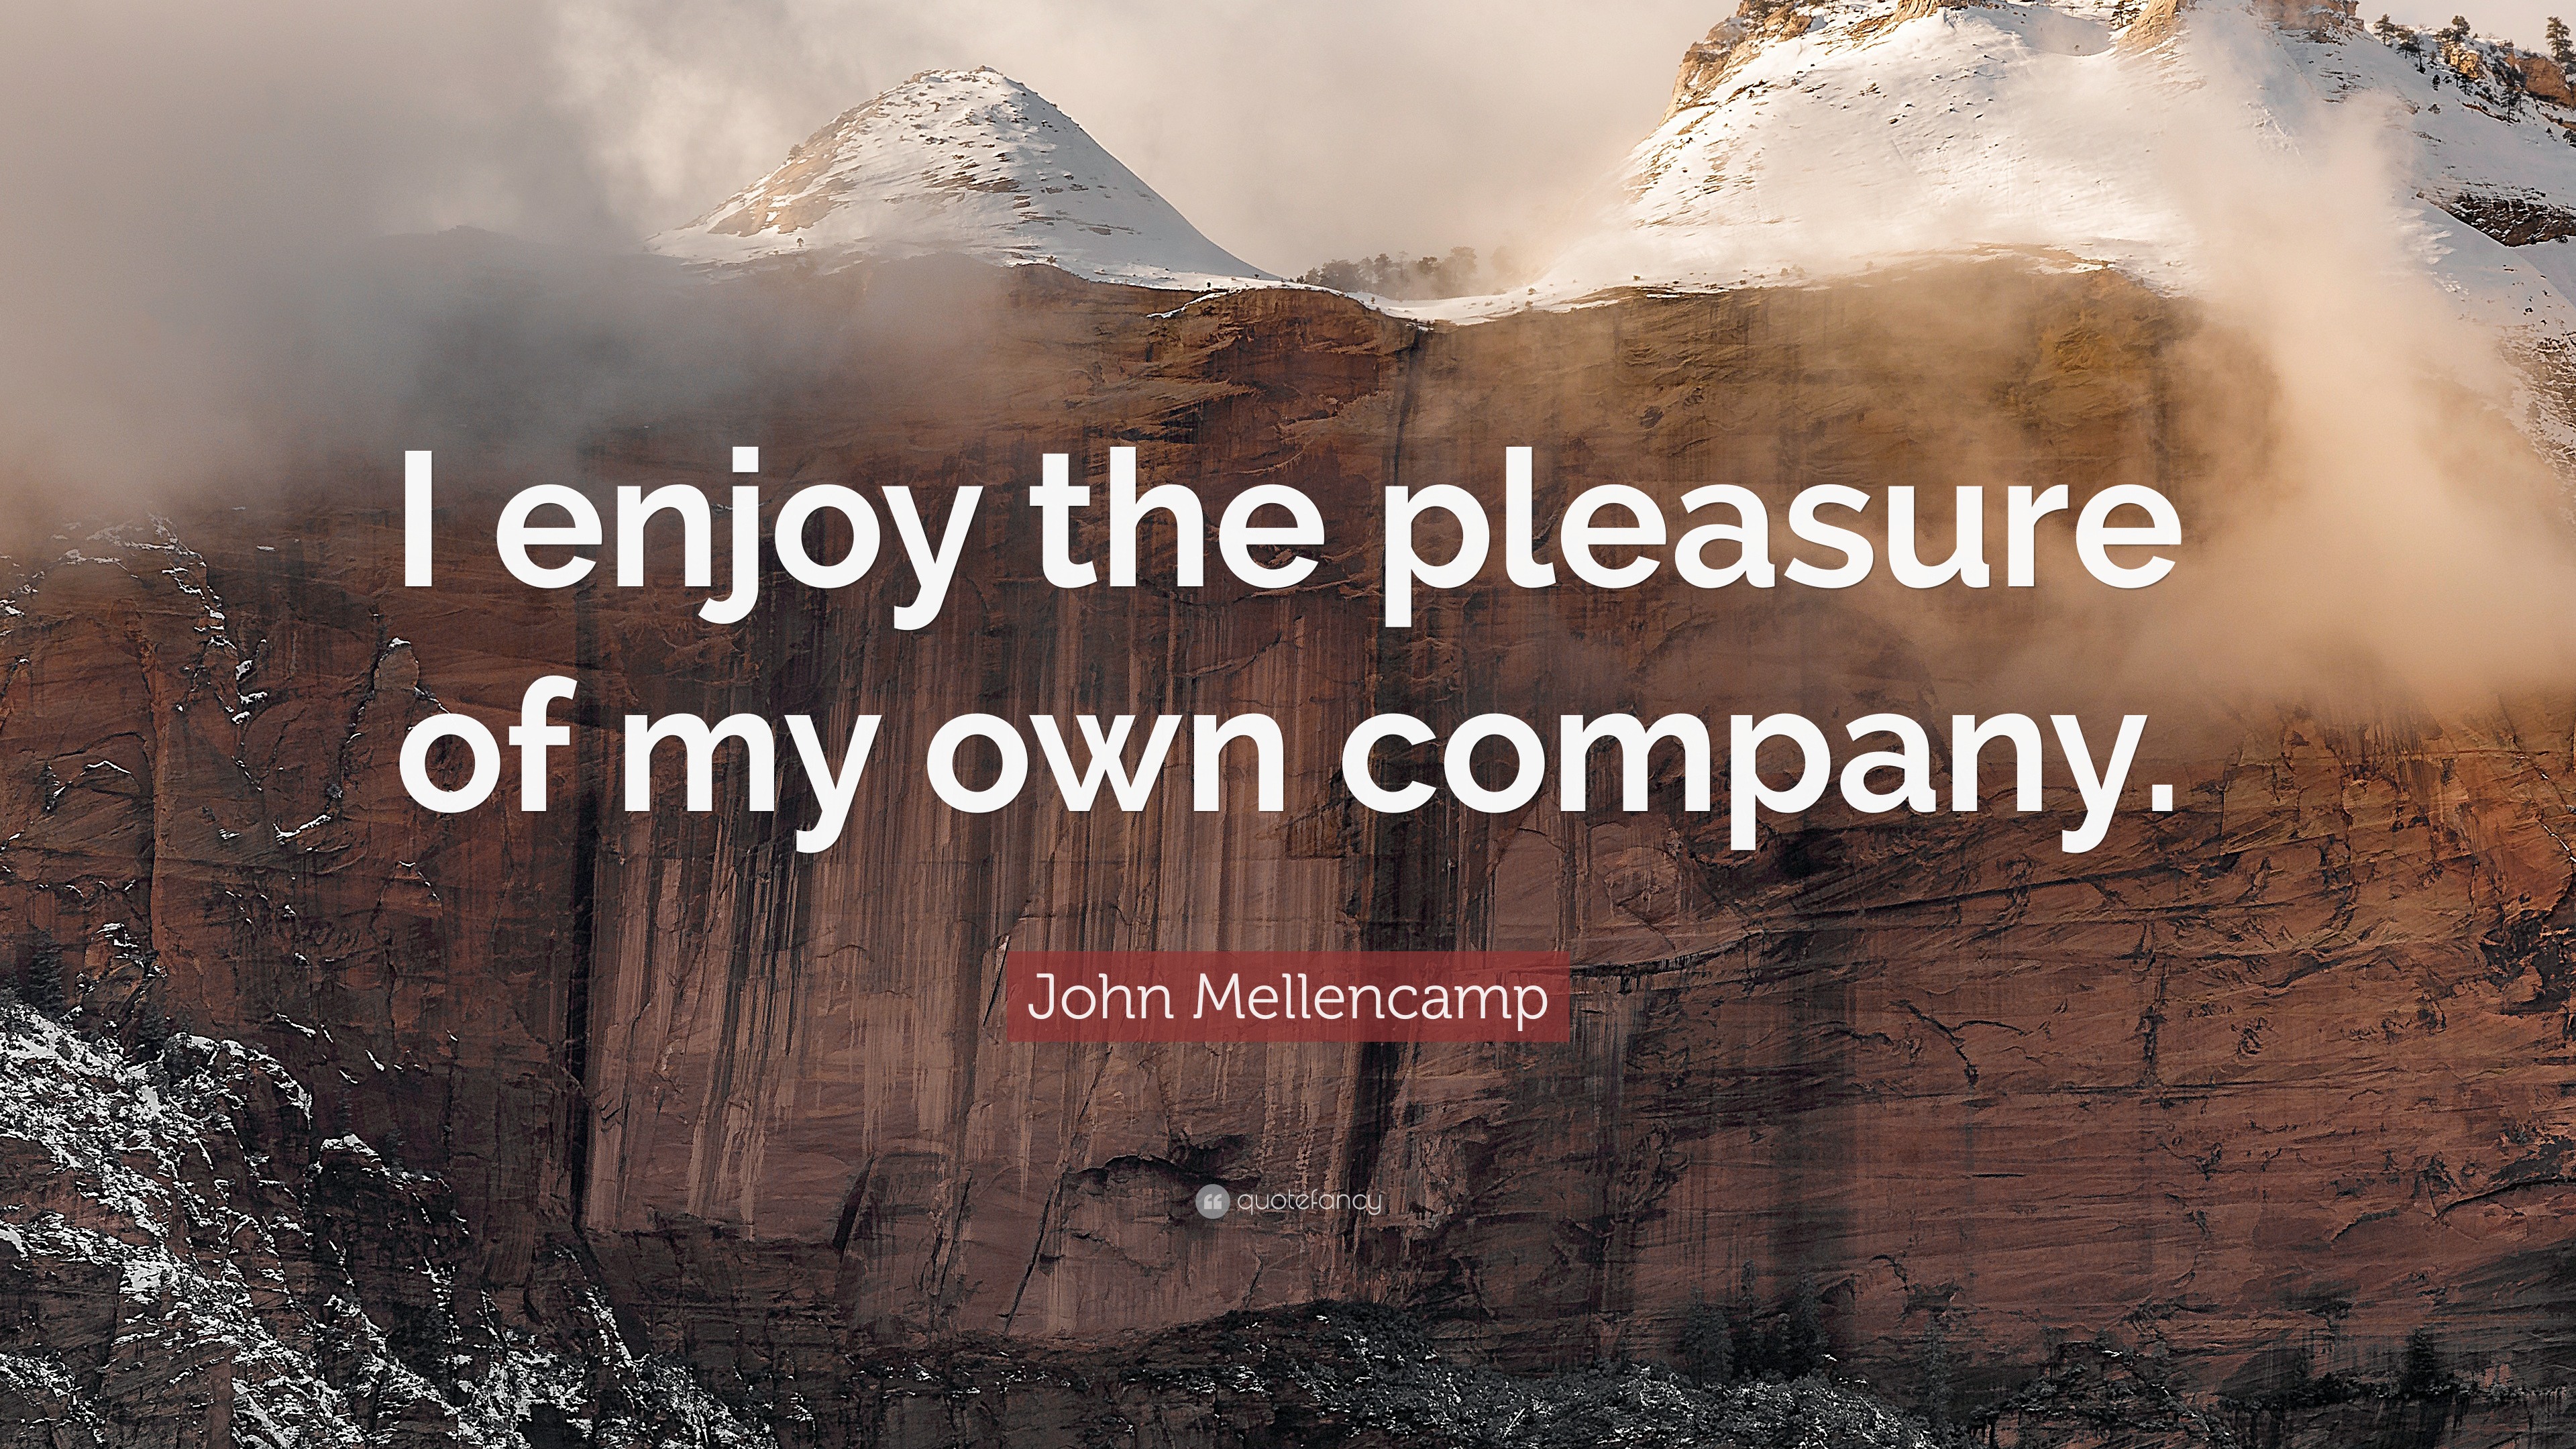 John Mellencamp Quote: “I enjoy the pleasure of my own company.”